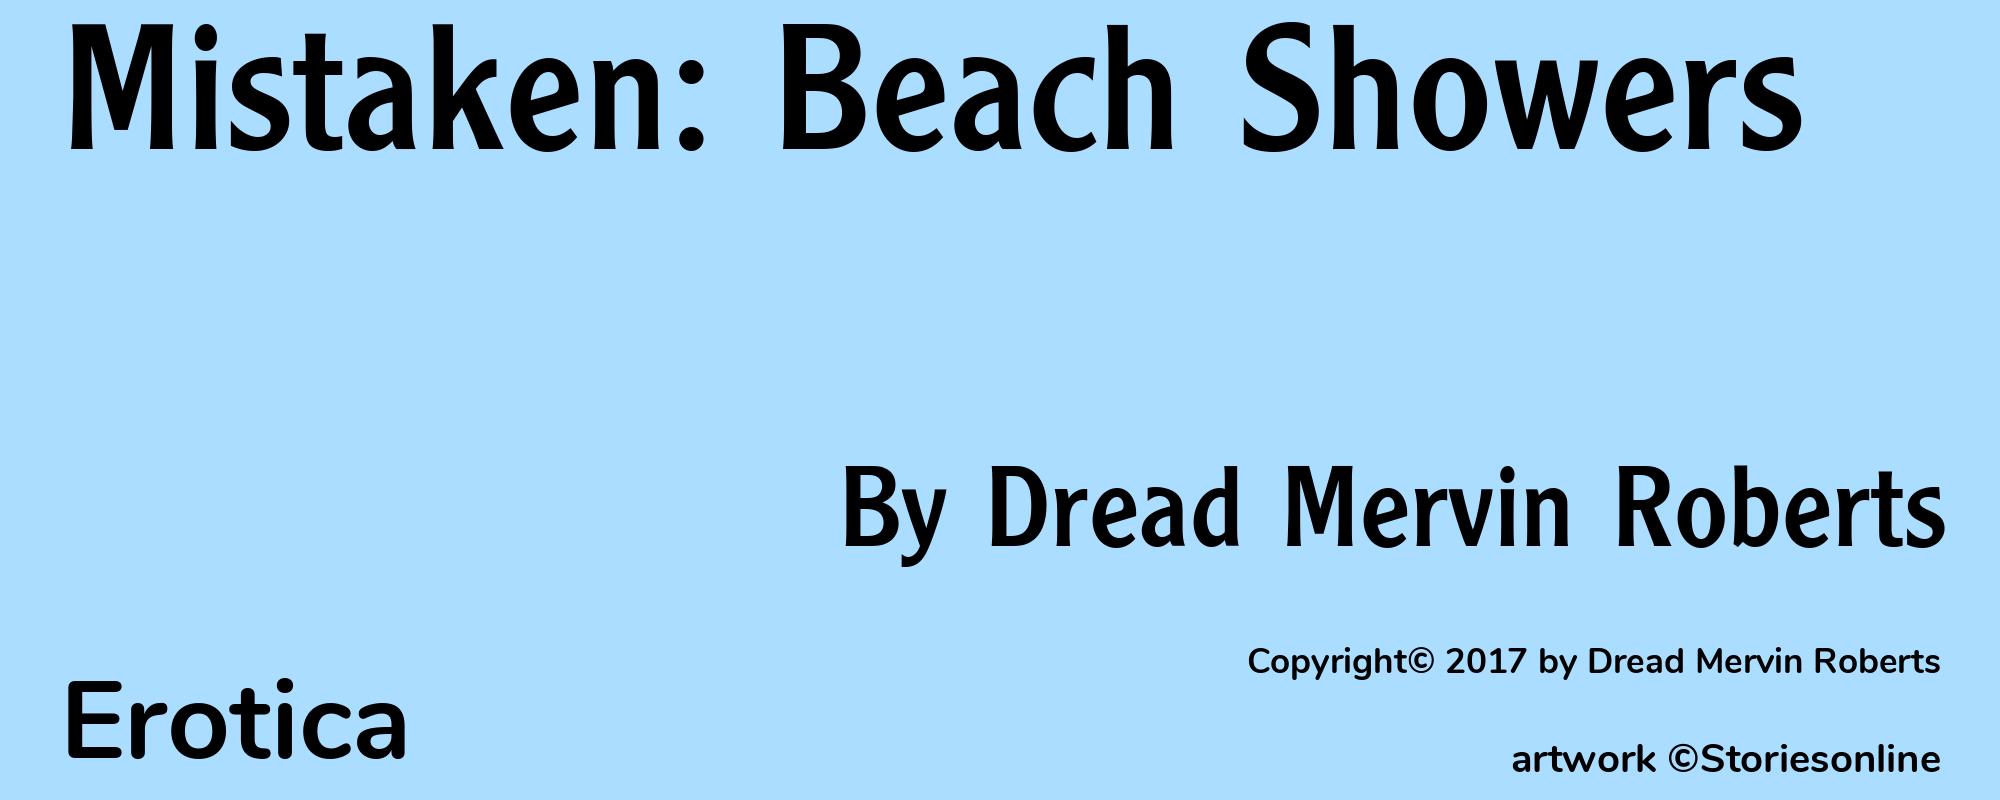 Mistaken: Beach Showers - Cover